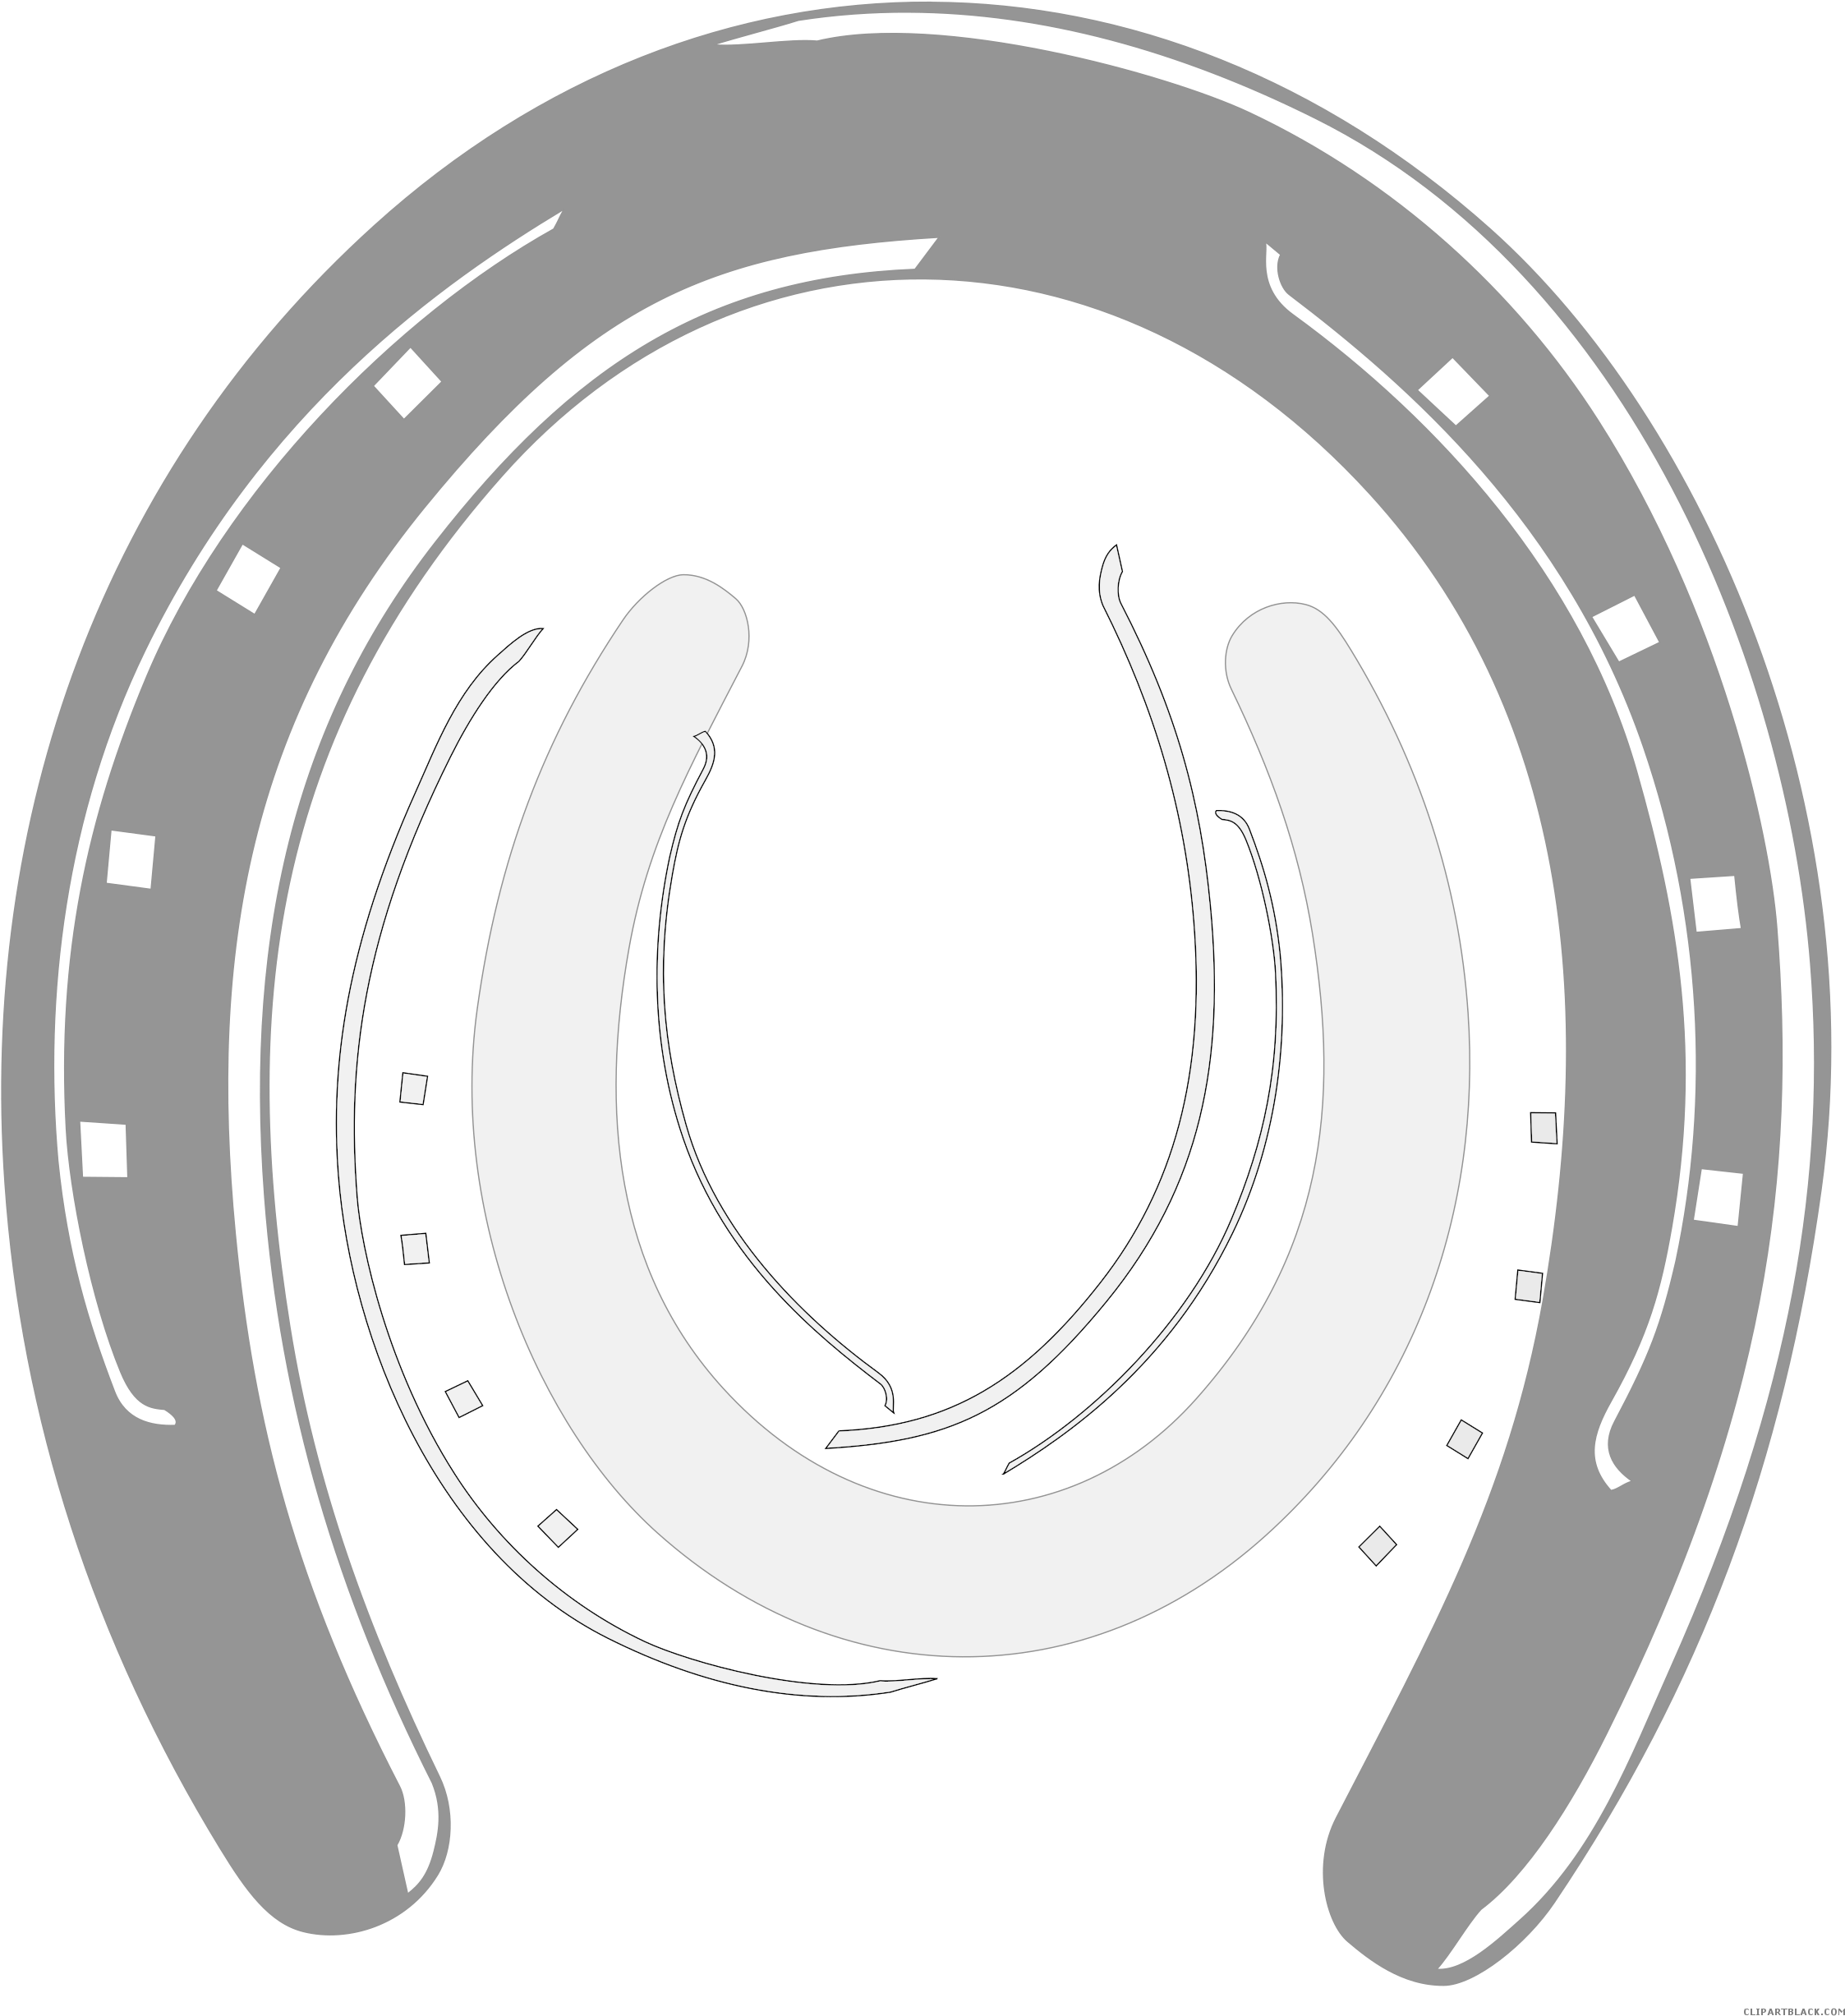 Horseshoe Animal Free Black White Clipart Images Clipartblack - Horse Shoe Graphic Design Tote Bag, Adult Unisex, Natural (2328x2500)